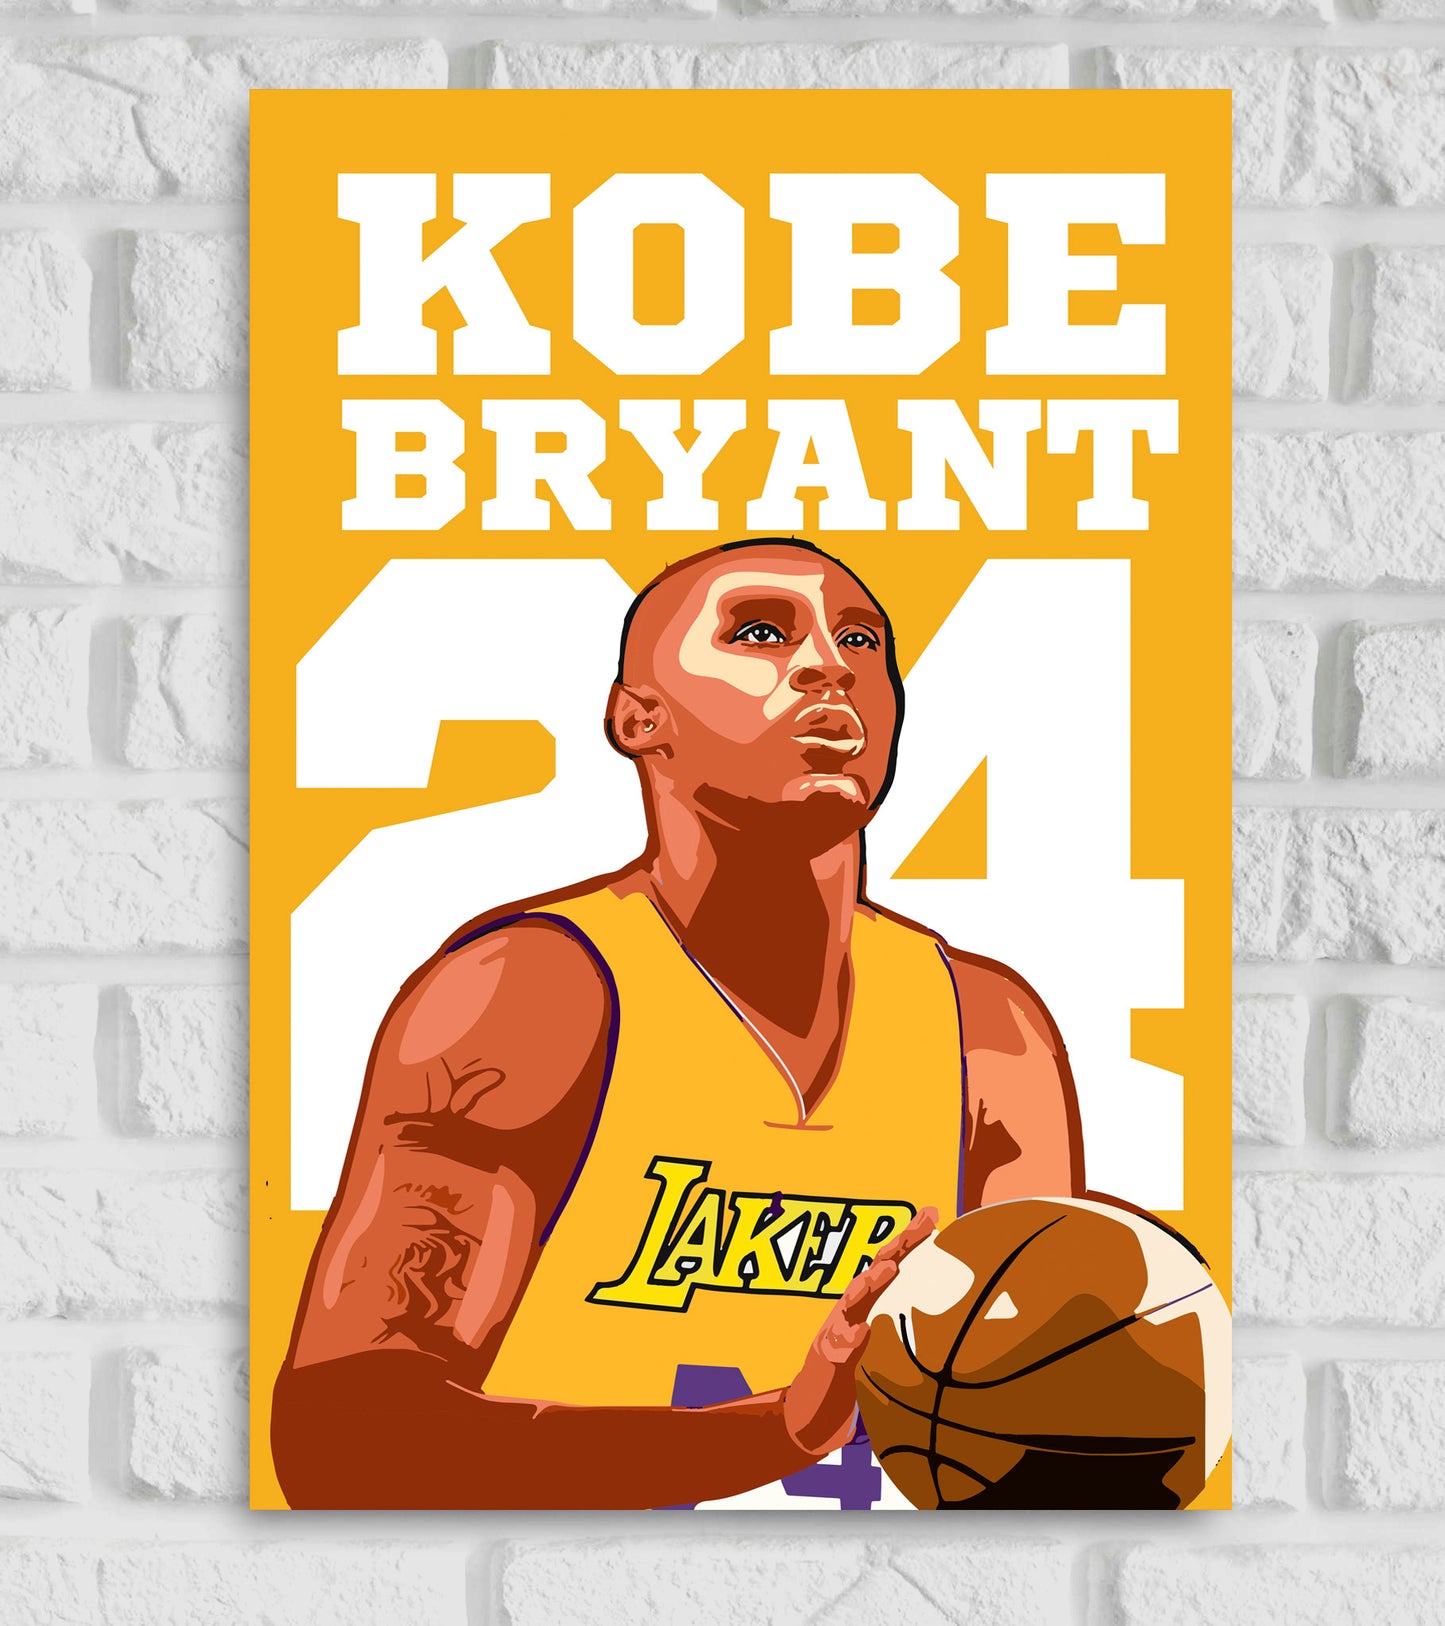 Kobe Bryant Pop Art work